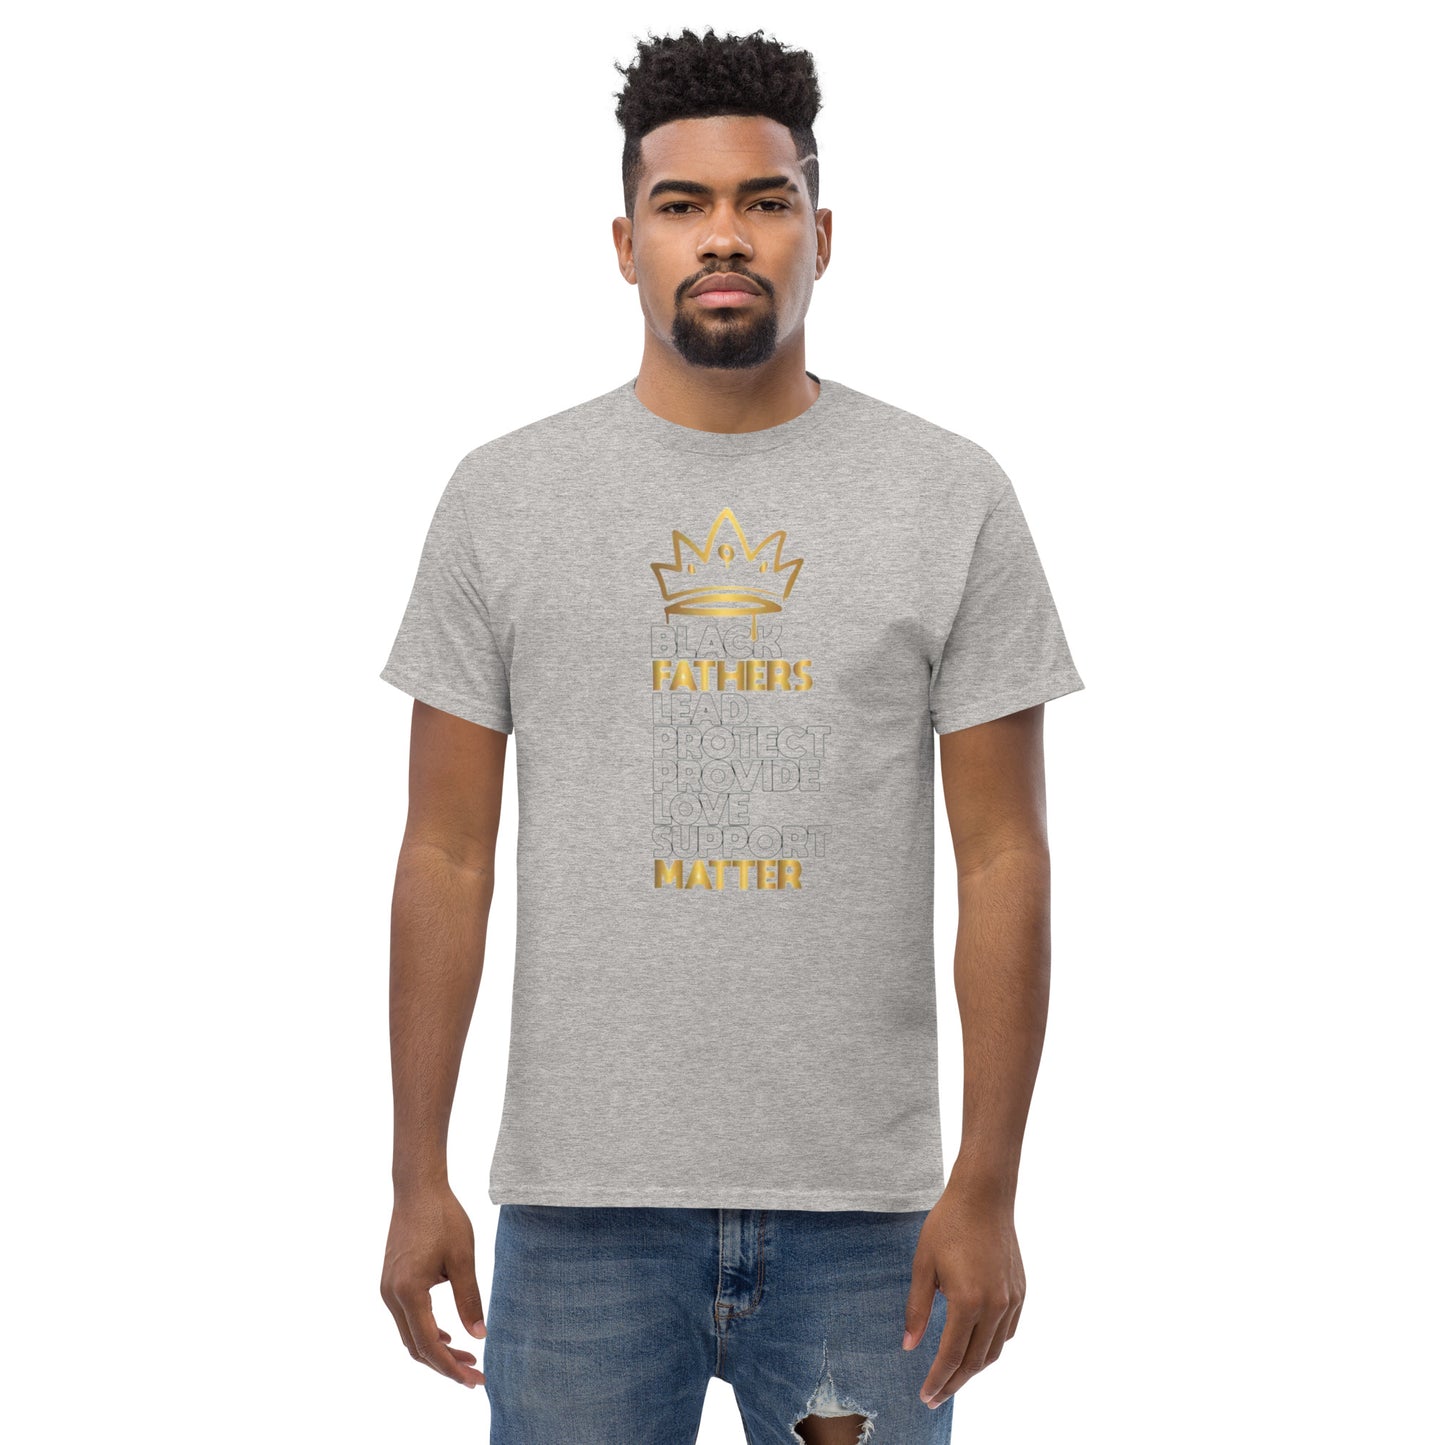 Men's T-Shirt:  Black Fathers